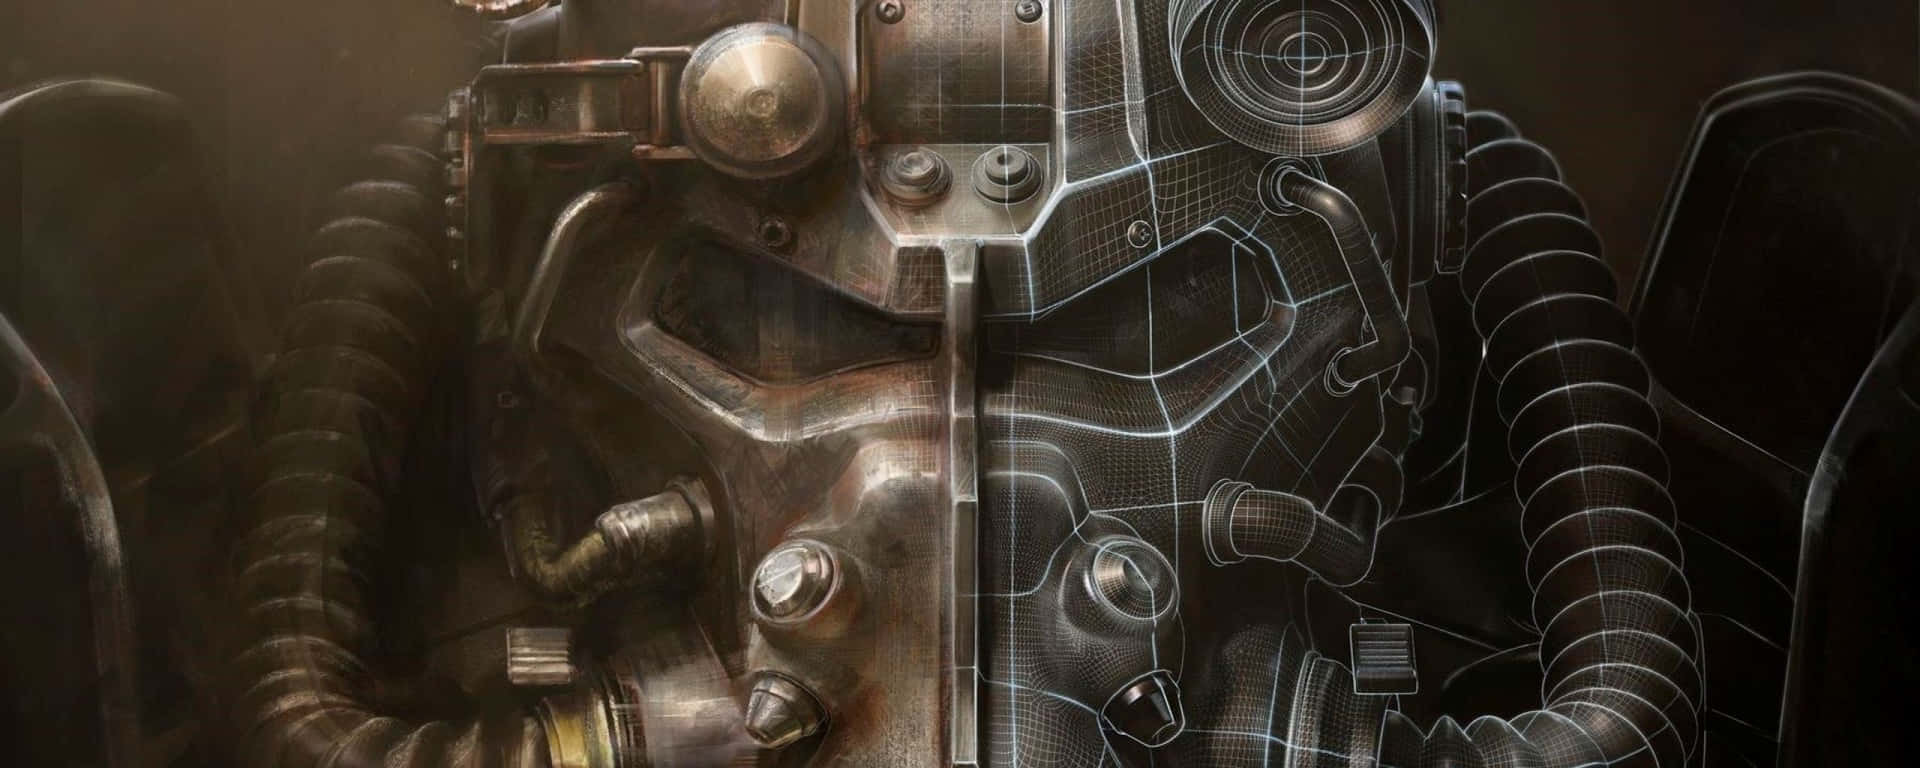 Fallout 4 - Hd Wallpapers Wallpaper